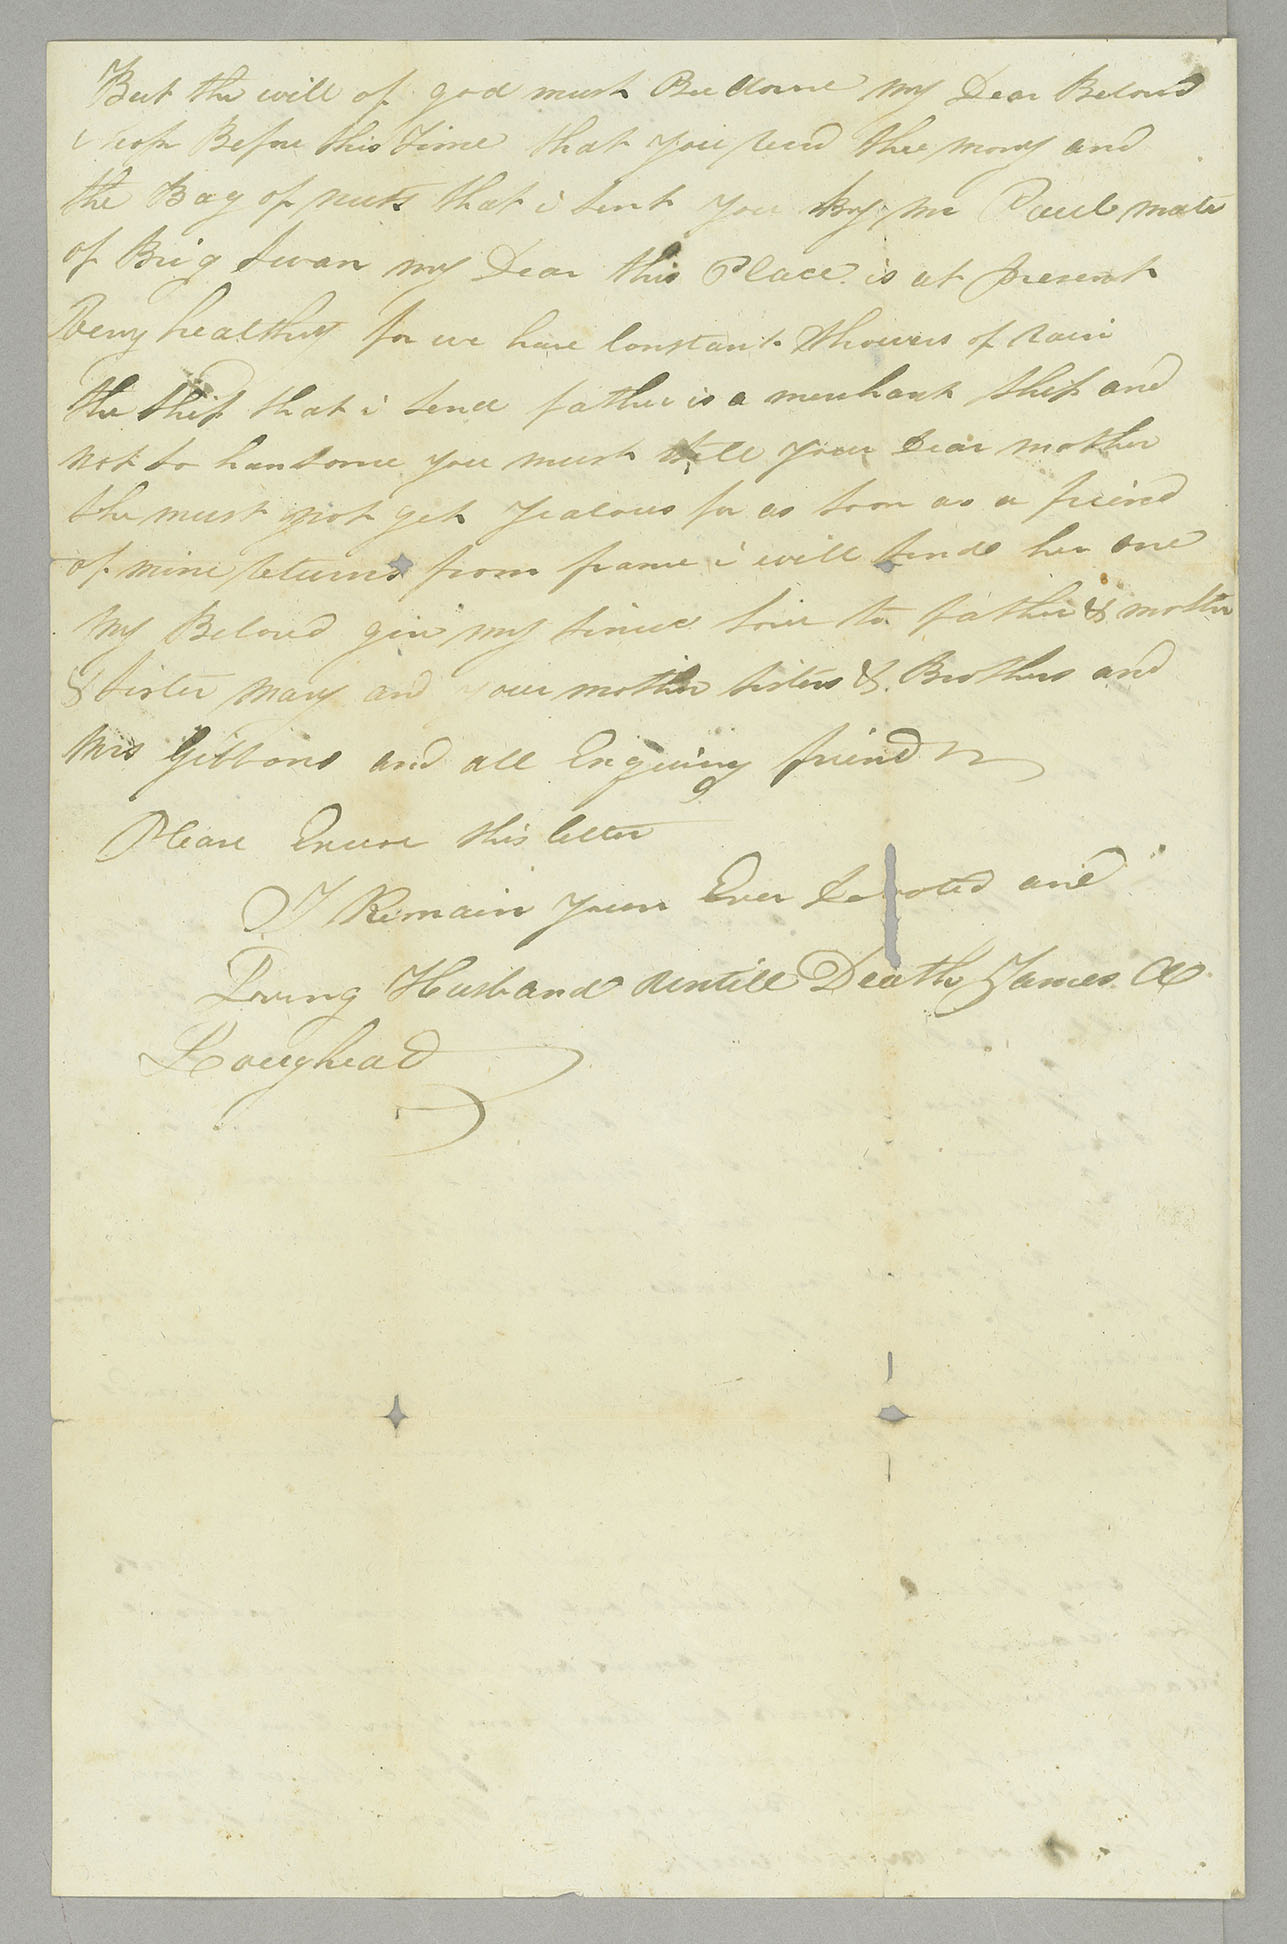 Letter, James A. Loughead, New Orleans, Louisiana, to Elizabeth [Jones] Loughead, Philadelphia, Pennsylvania, Page 2